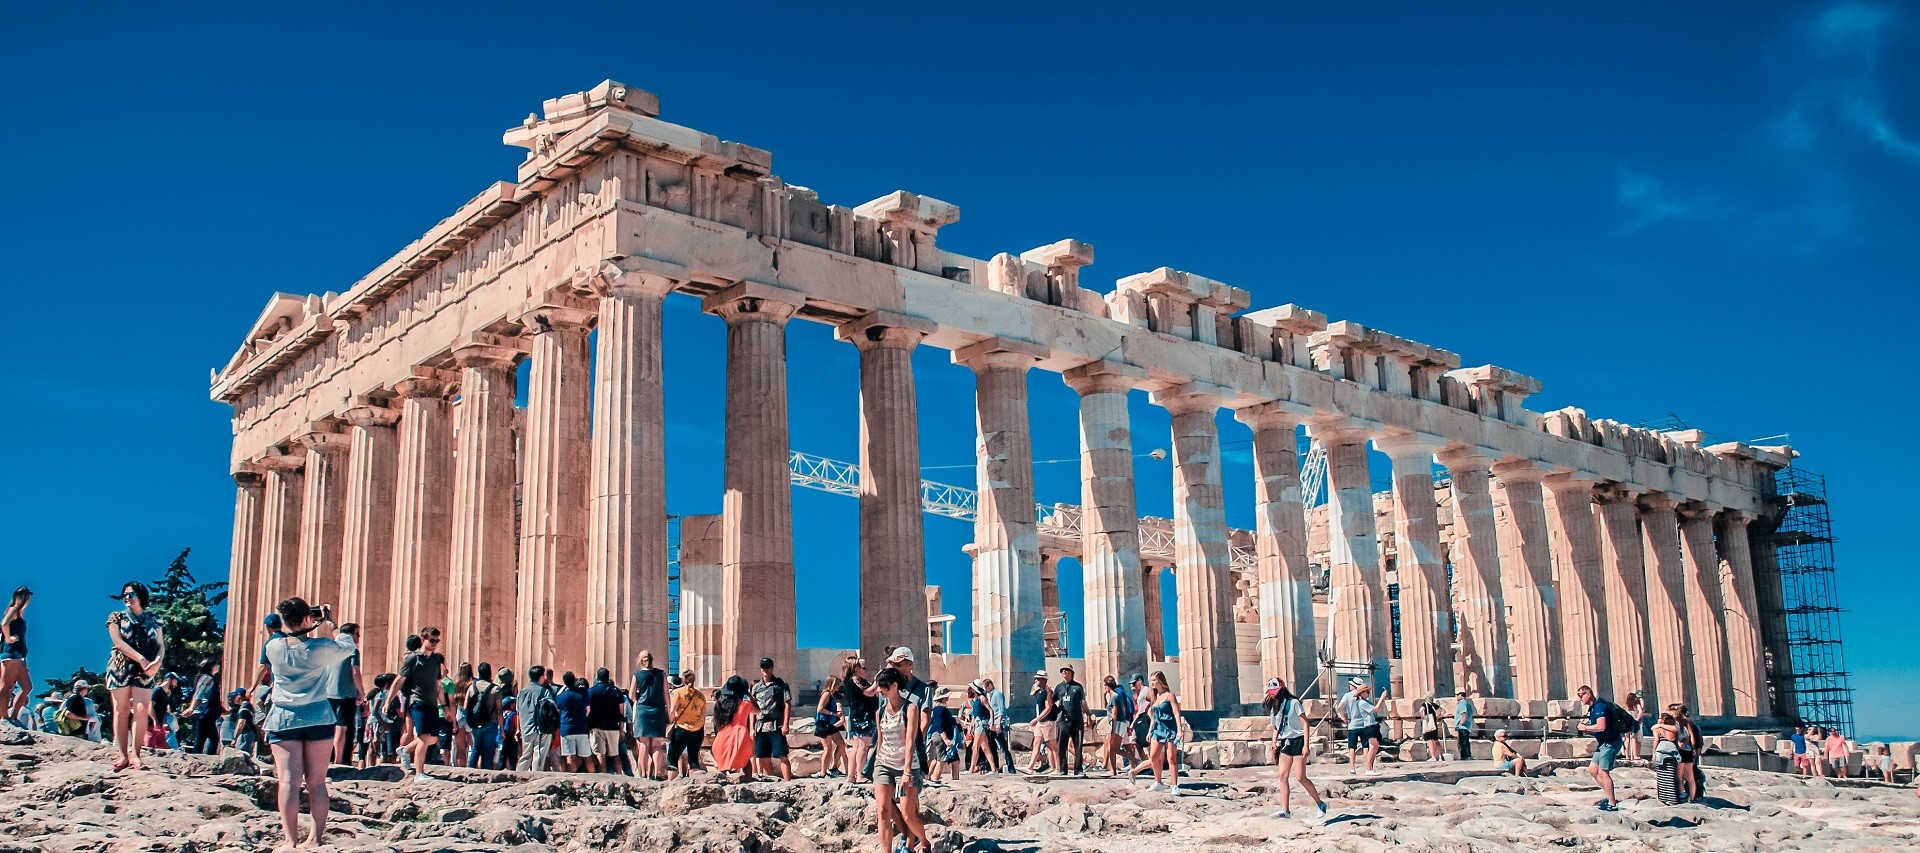 Skip the Line: Acropolis, Acropolis Museum & Temple of Poseidon Tour including Lunch